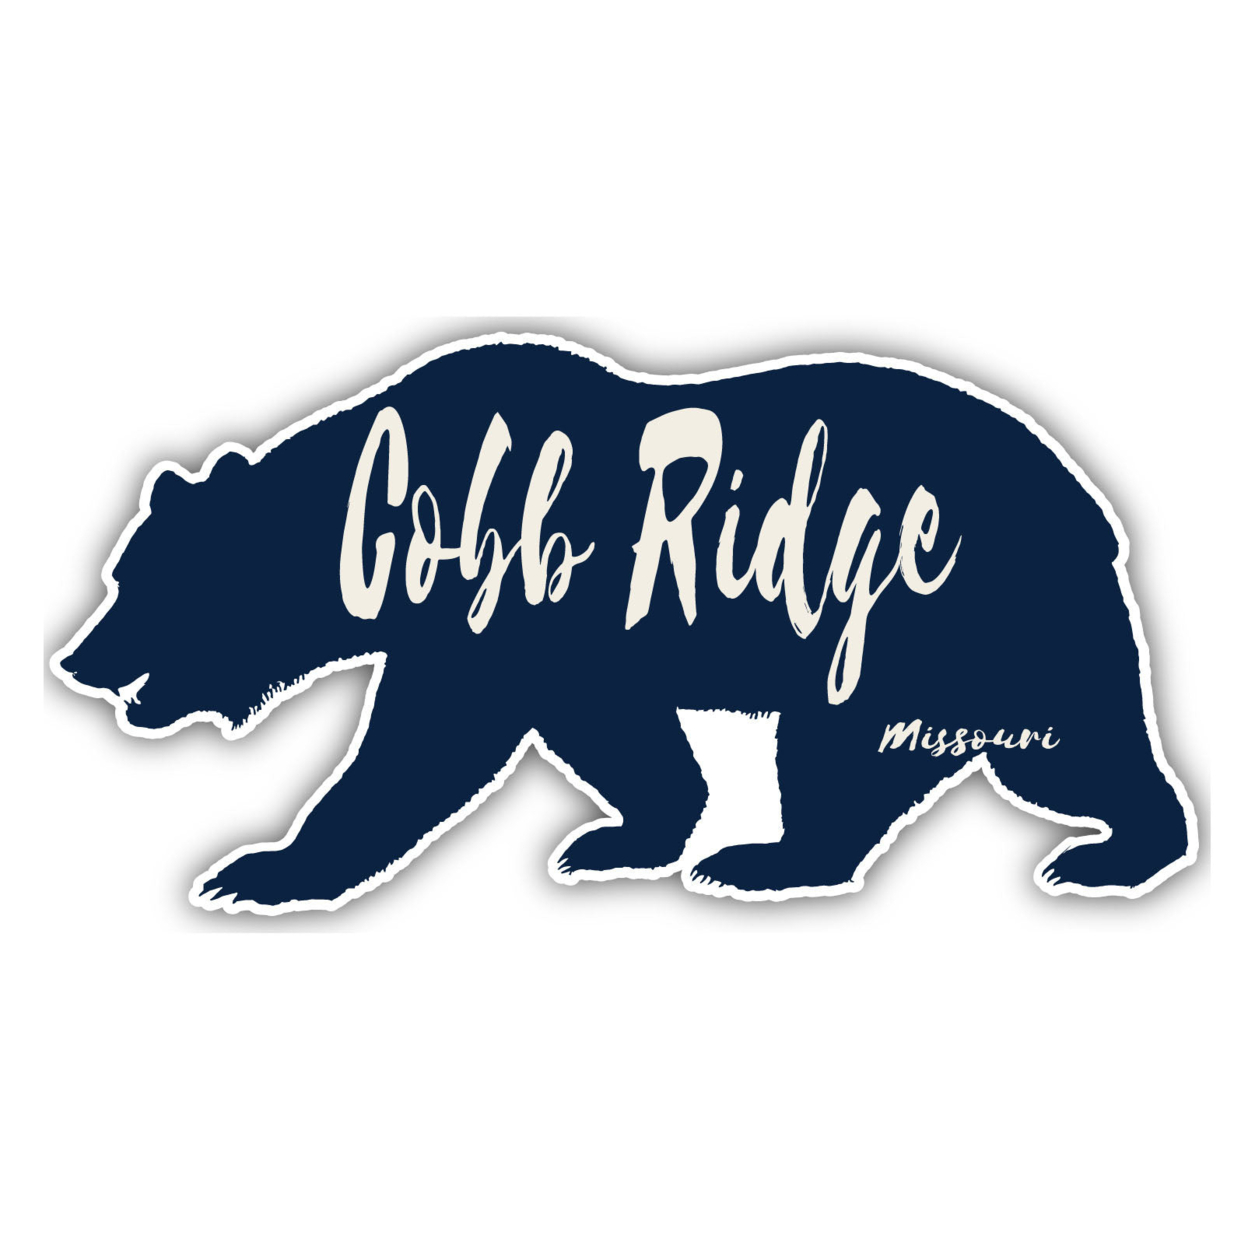 Cobb Ridge Missouri Souvenir Decorative Stickers (Choose Theme And Size) - 4-Pack, 2-Inch, Bear